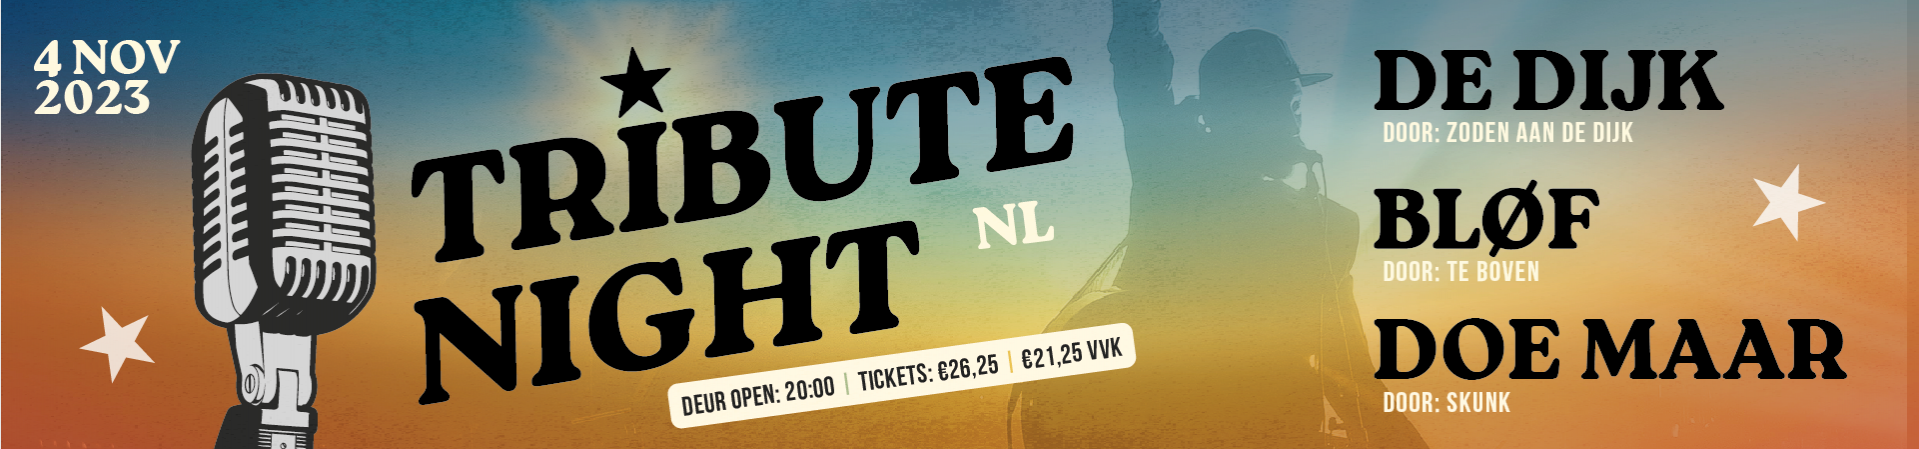 De Ster Tribute Night NL tickets